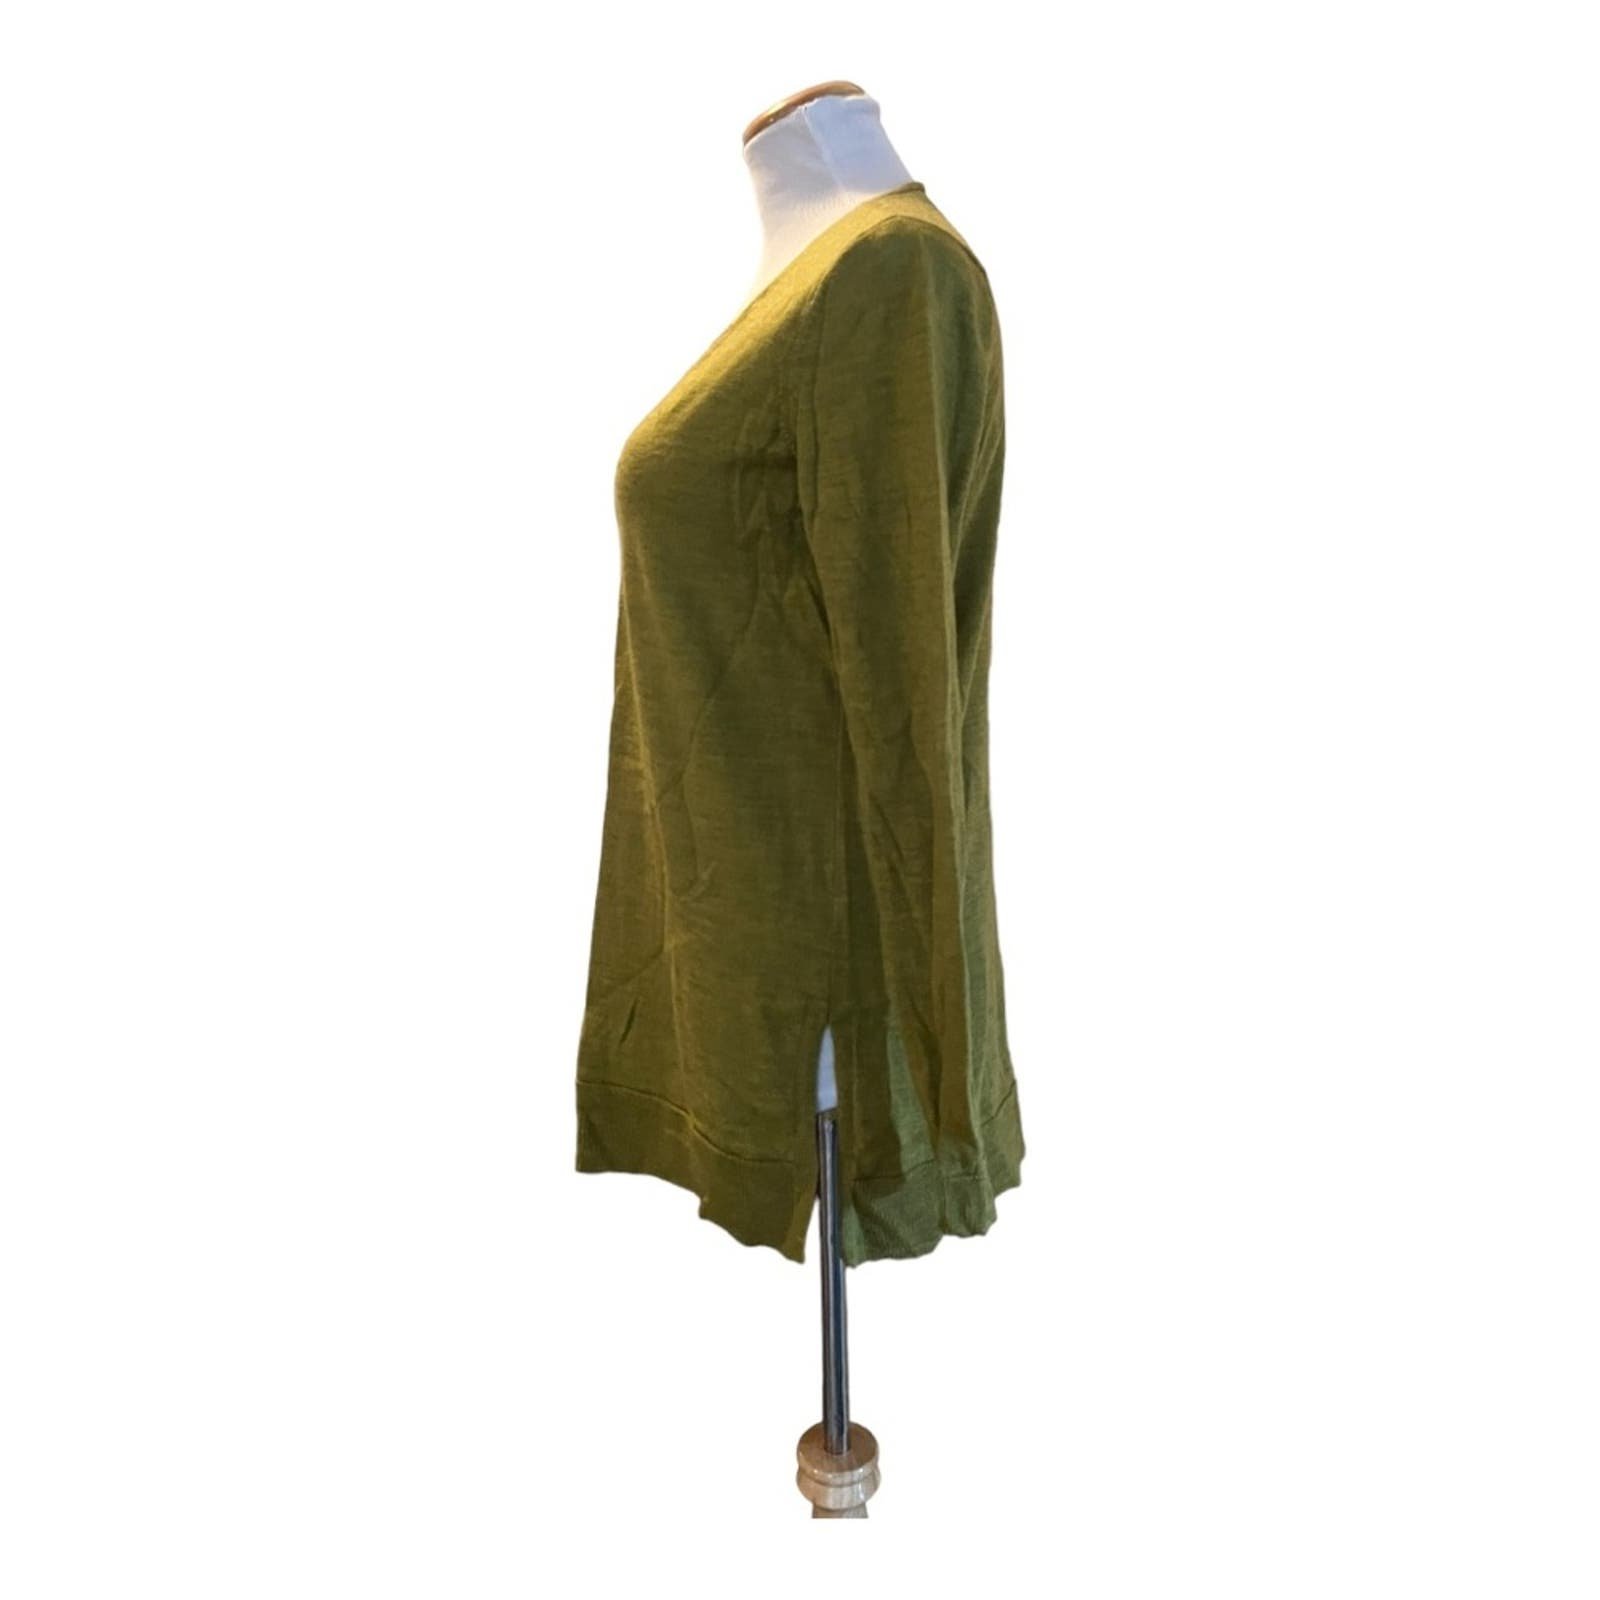 Perfect Eileen Fisher Merino Wool Green Sweater VNeck Lightweight PS ja8zAvU1f Outlet Store